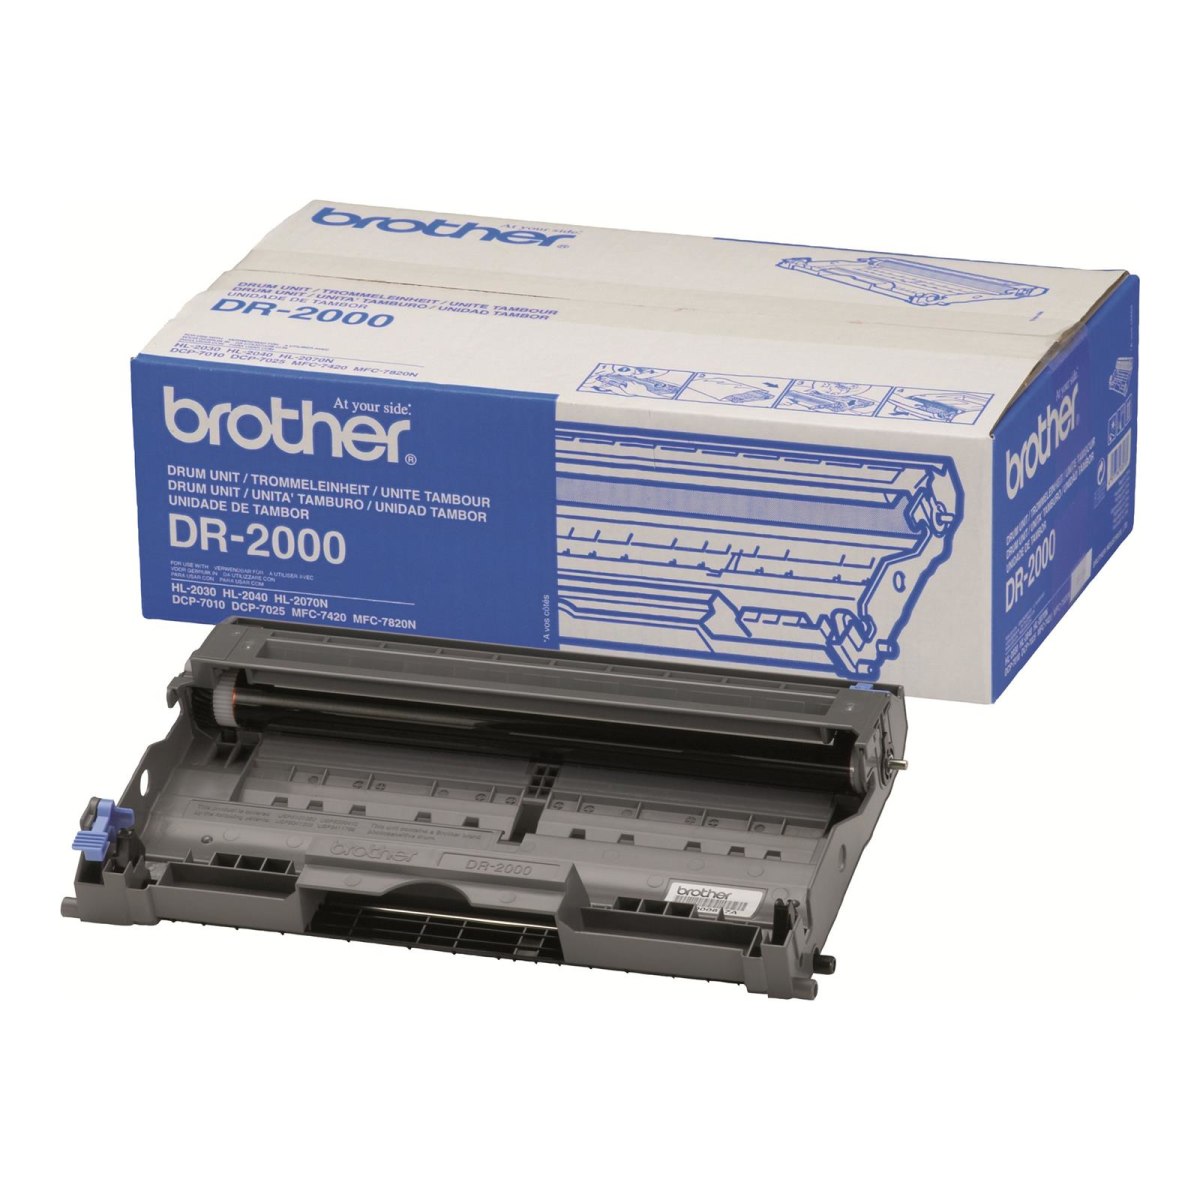 4 Toner kompatibel für Brother TN-2000 DCP-7010 HL-2030 MFC-7420 Fax 2820 2920 